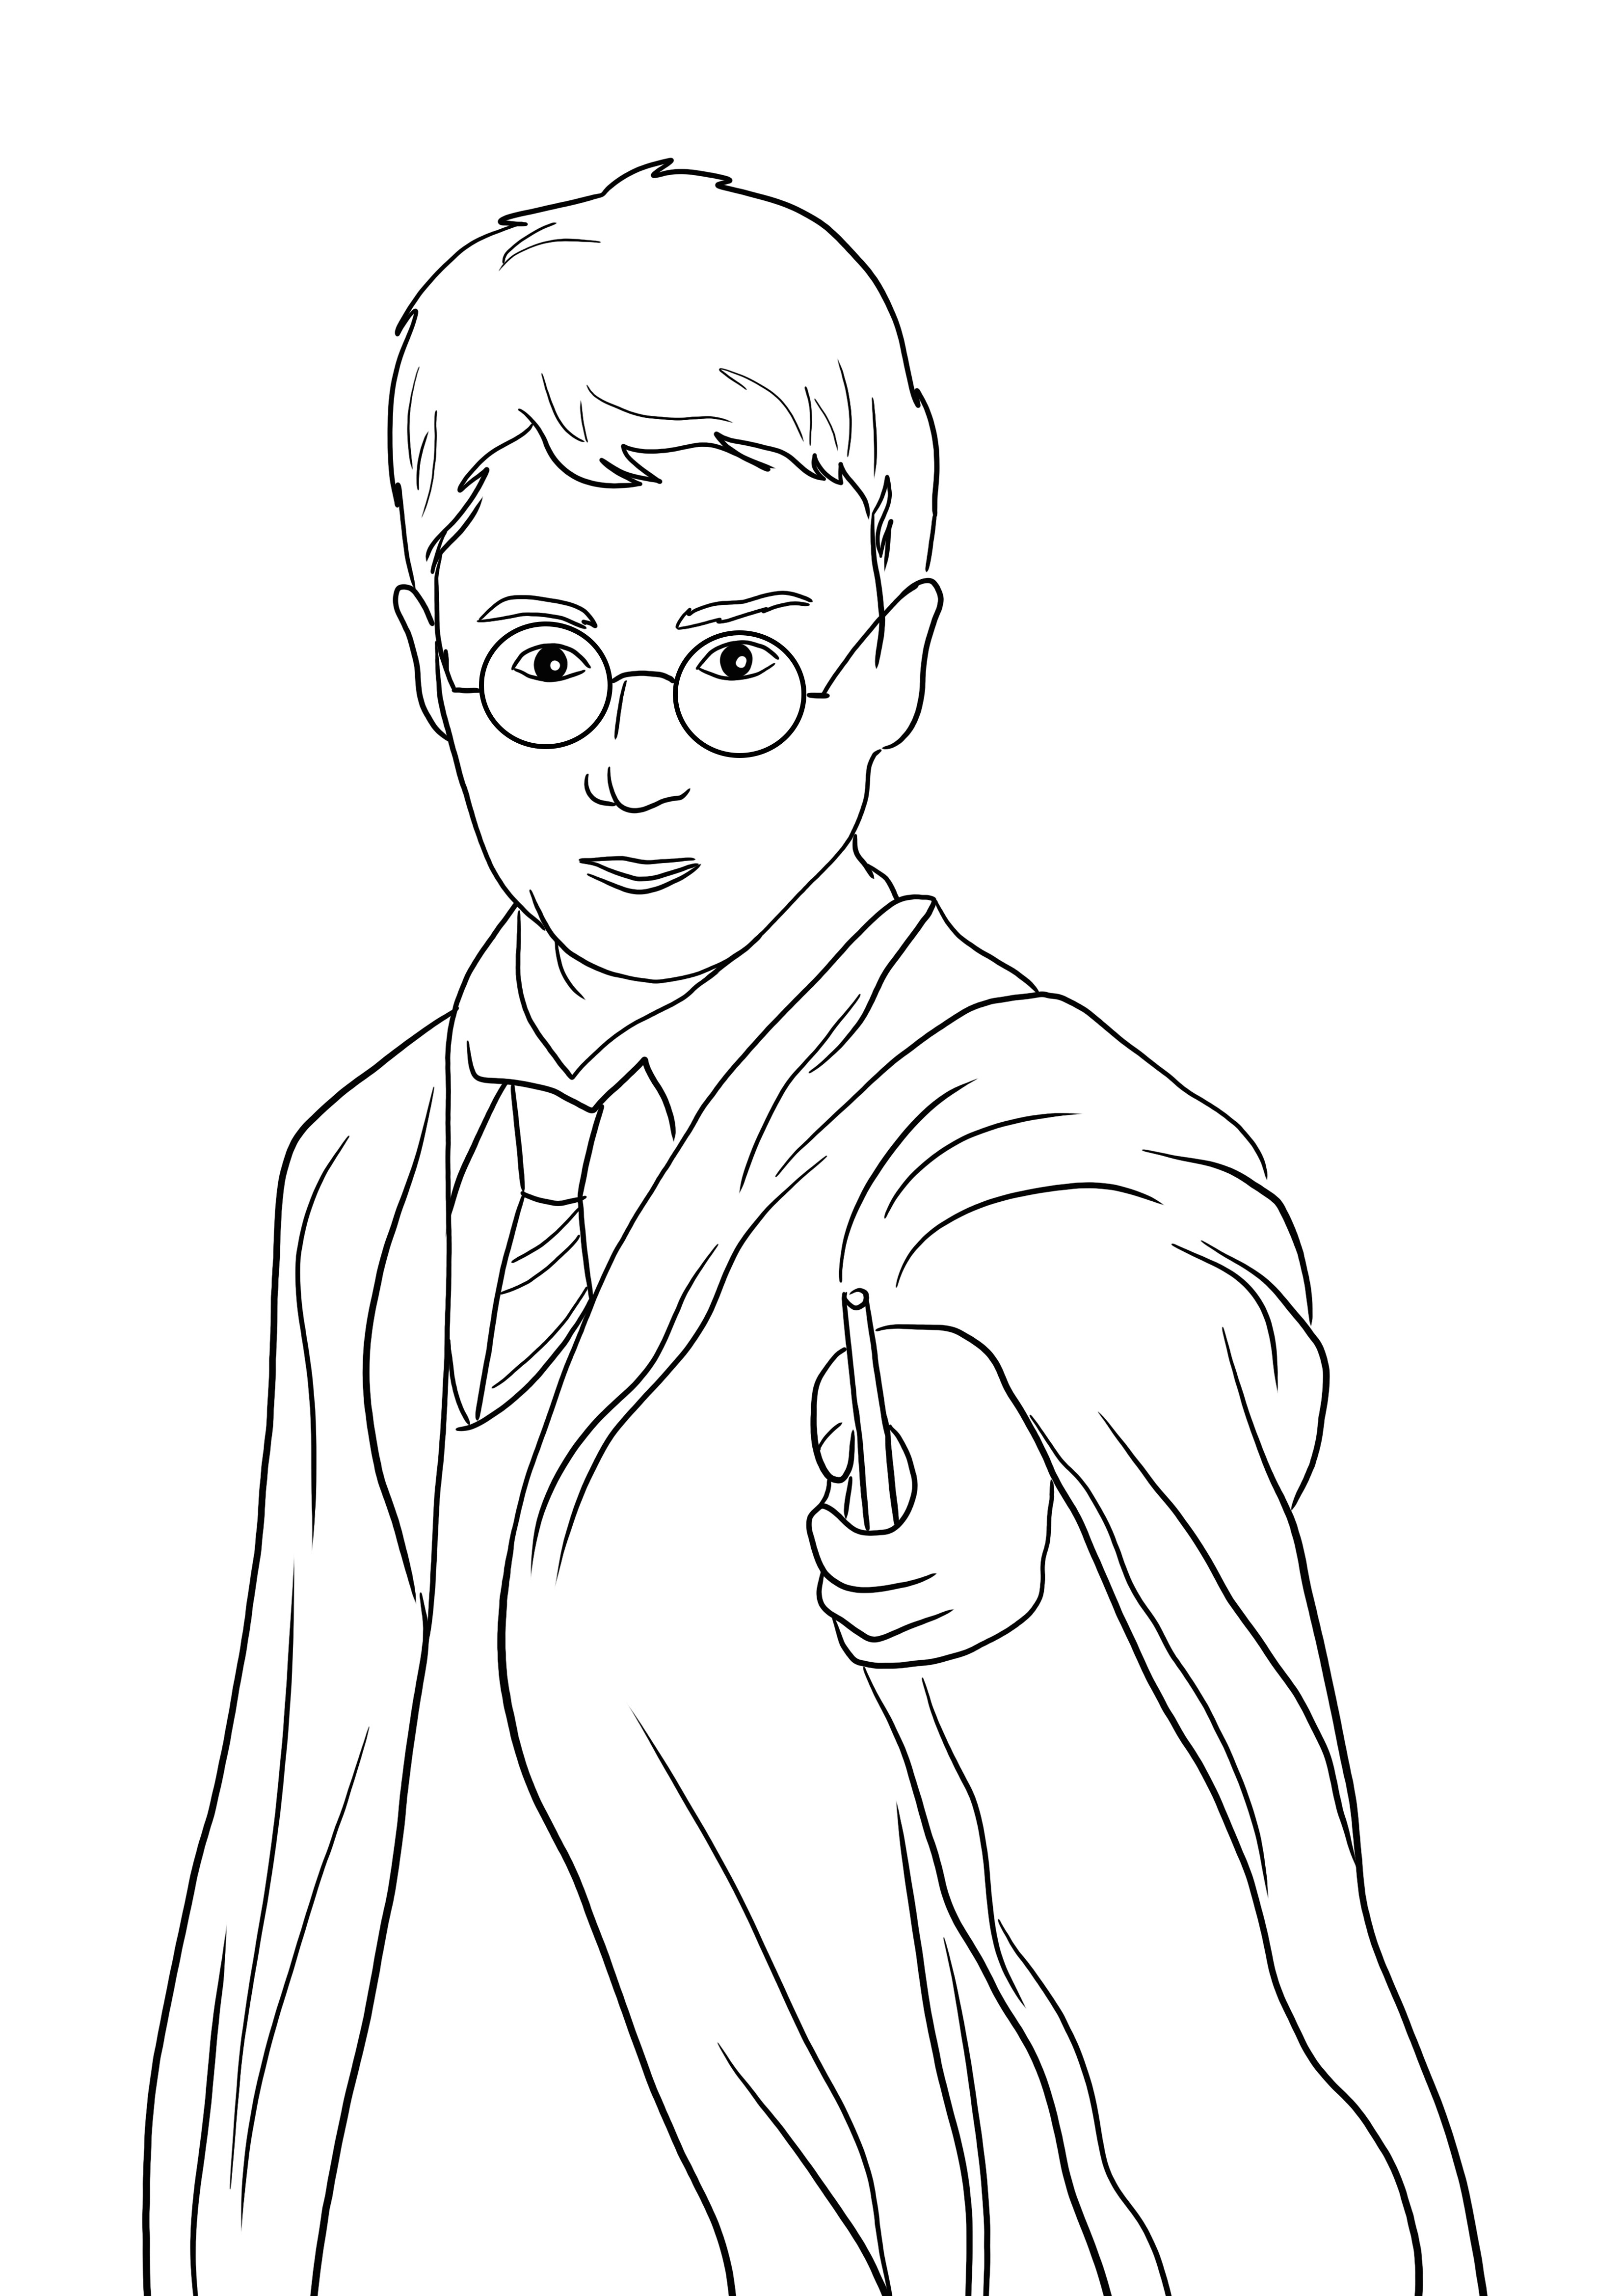 Harry Potter para colorear e imprimir gratis para descargar o guardar para más tarde